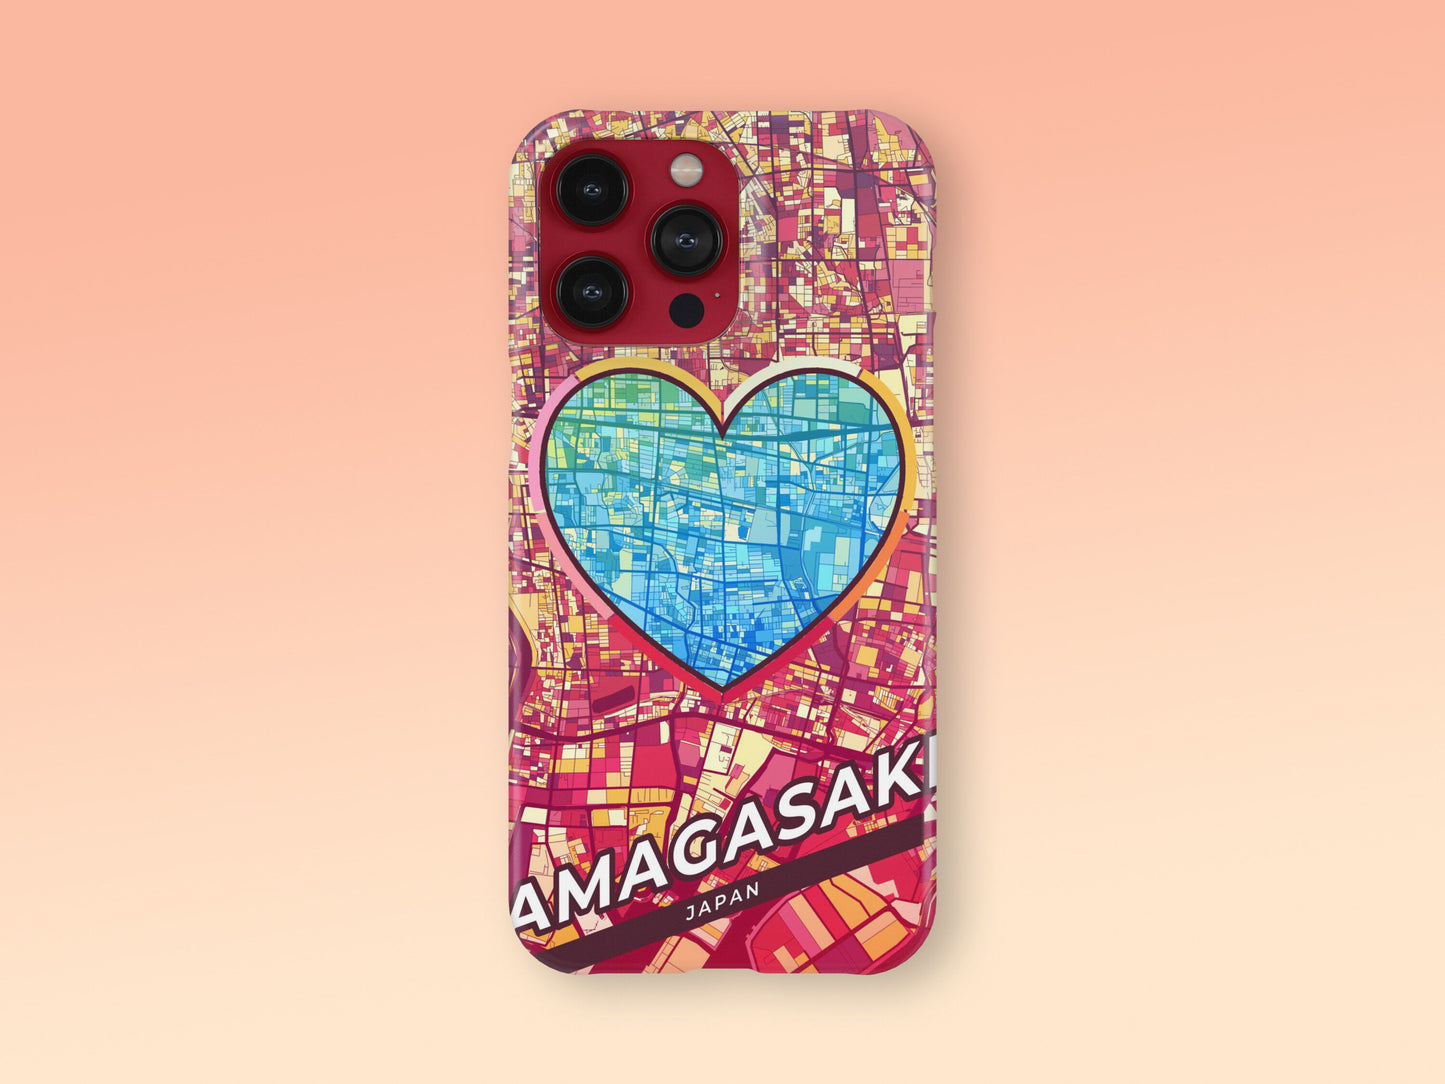 Amagasaki Japan slim phone case with colorful icon. Birthday, wedding or housewarming gift. Couple match cases. 2